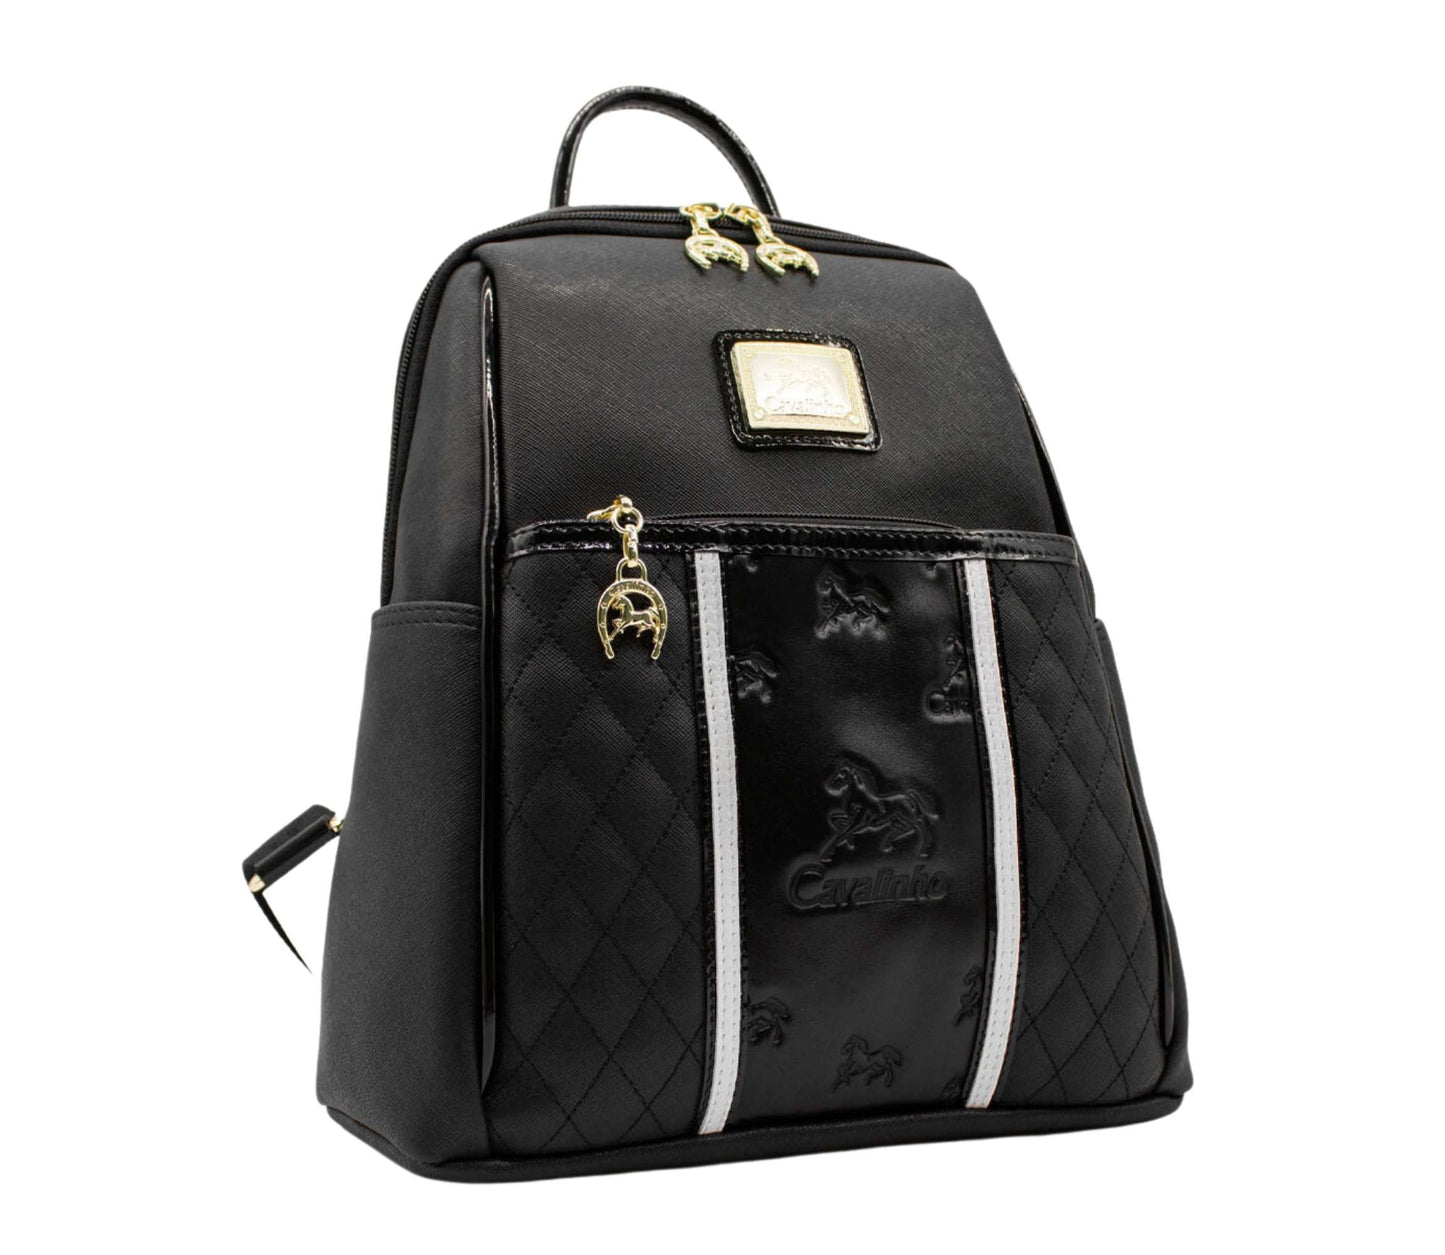 Cavalinho Royal Backpack - Black and White - 18390249.21.99_2